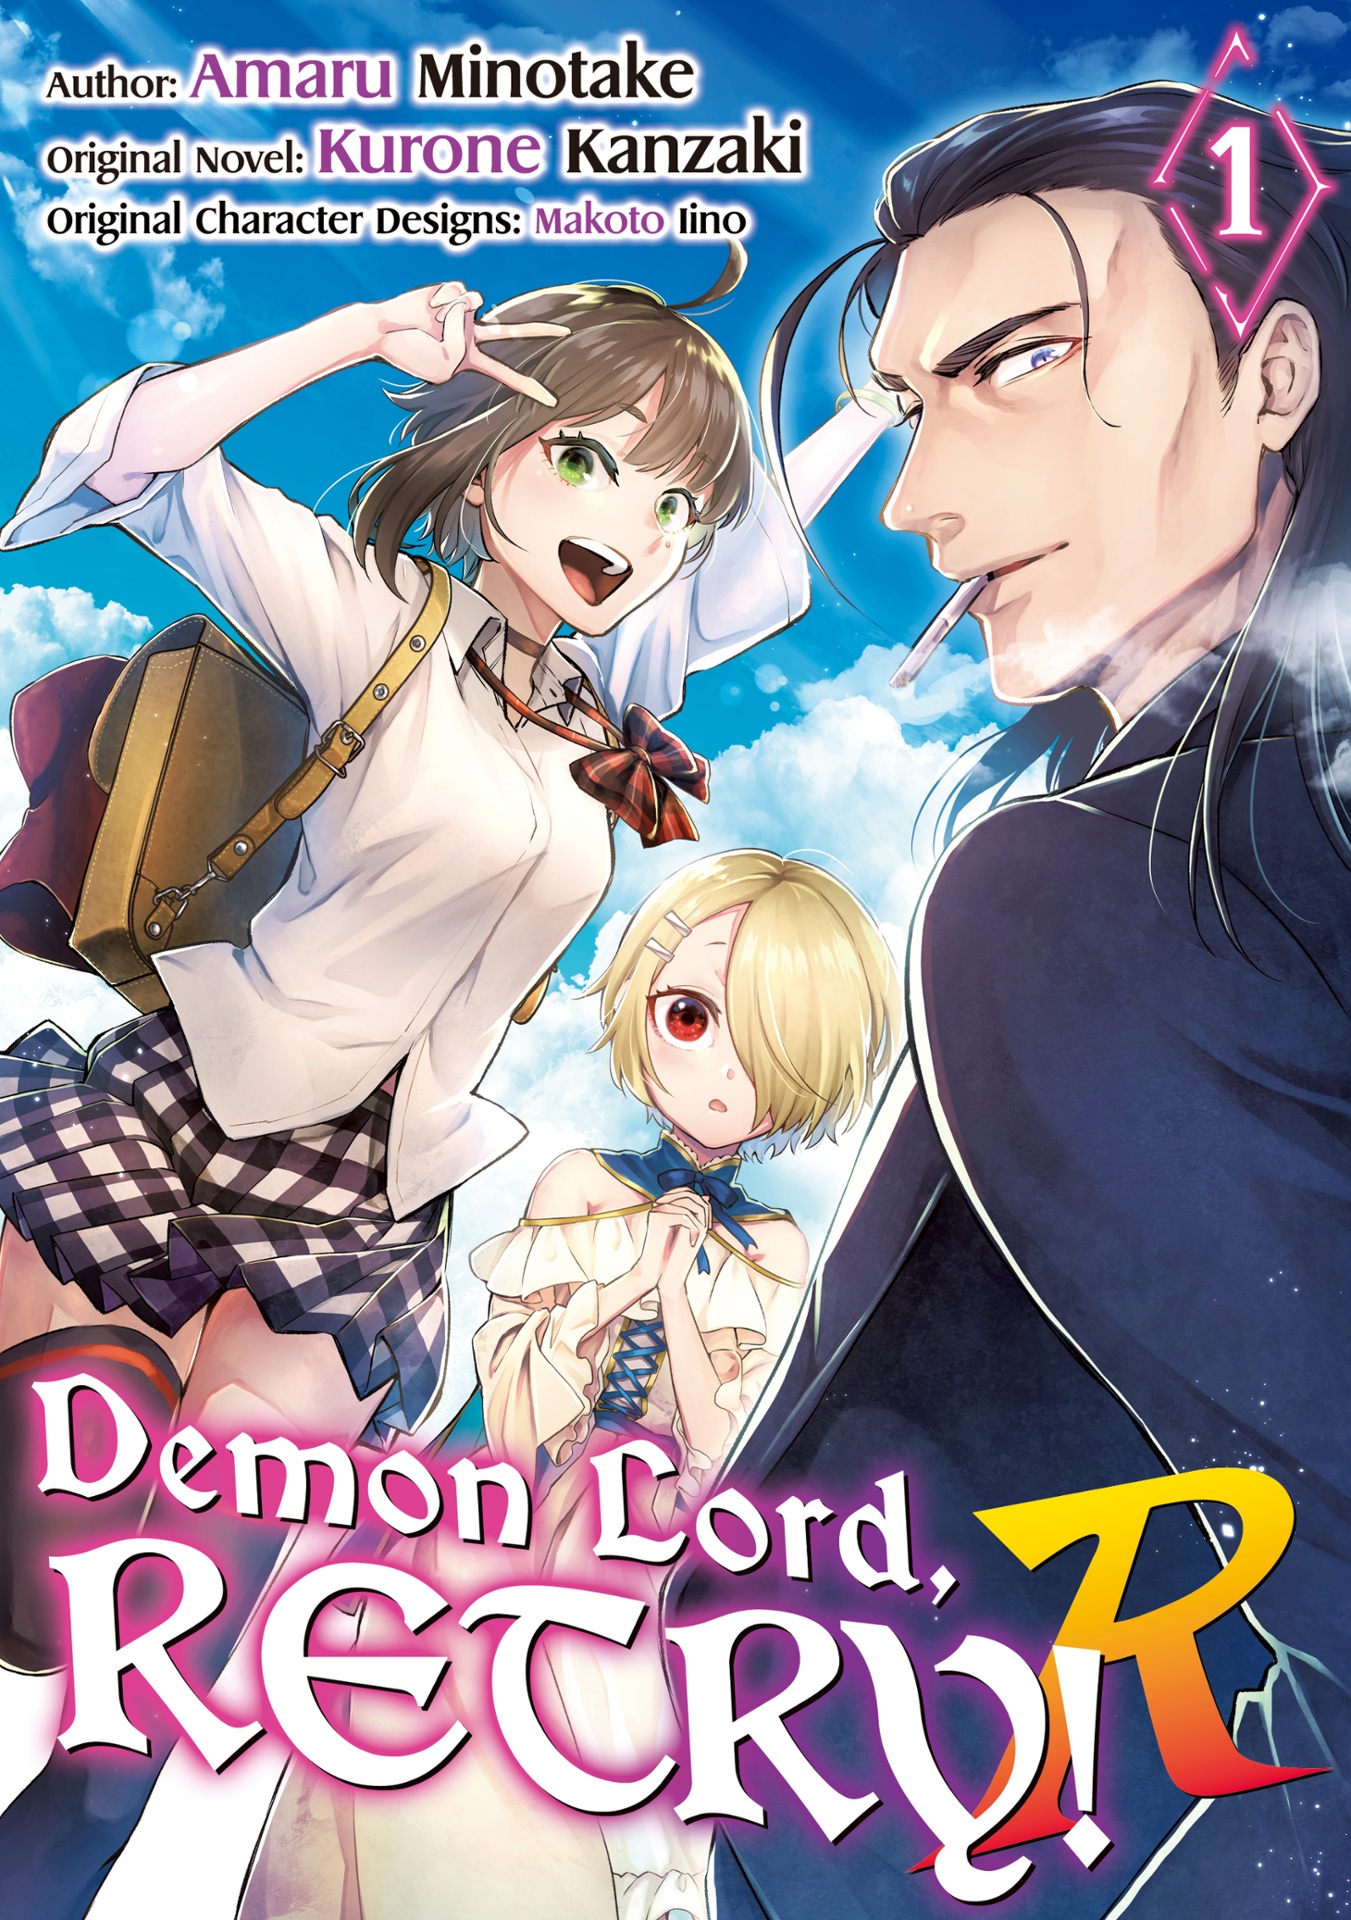 Demon Lord, Retry! R Sequel Manga Gets Anime - News - Anime News Network